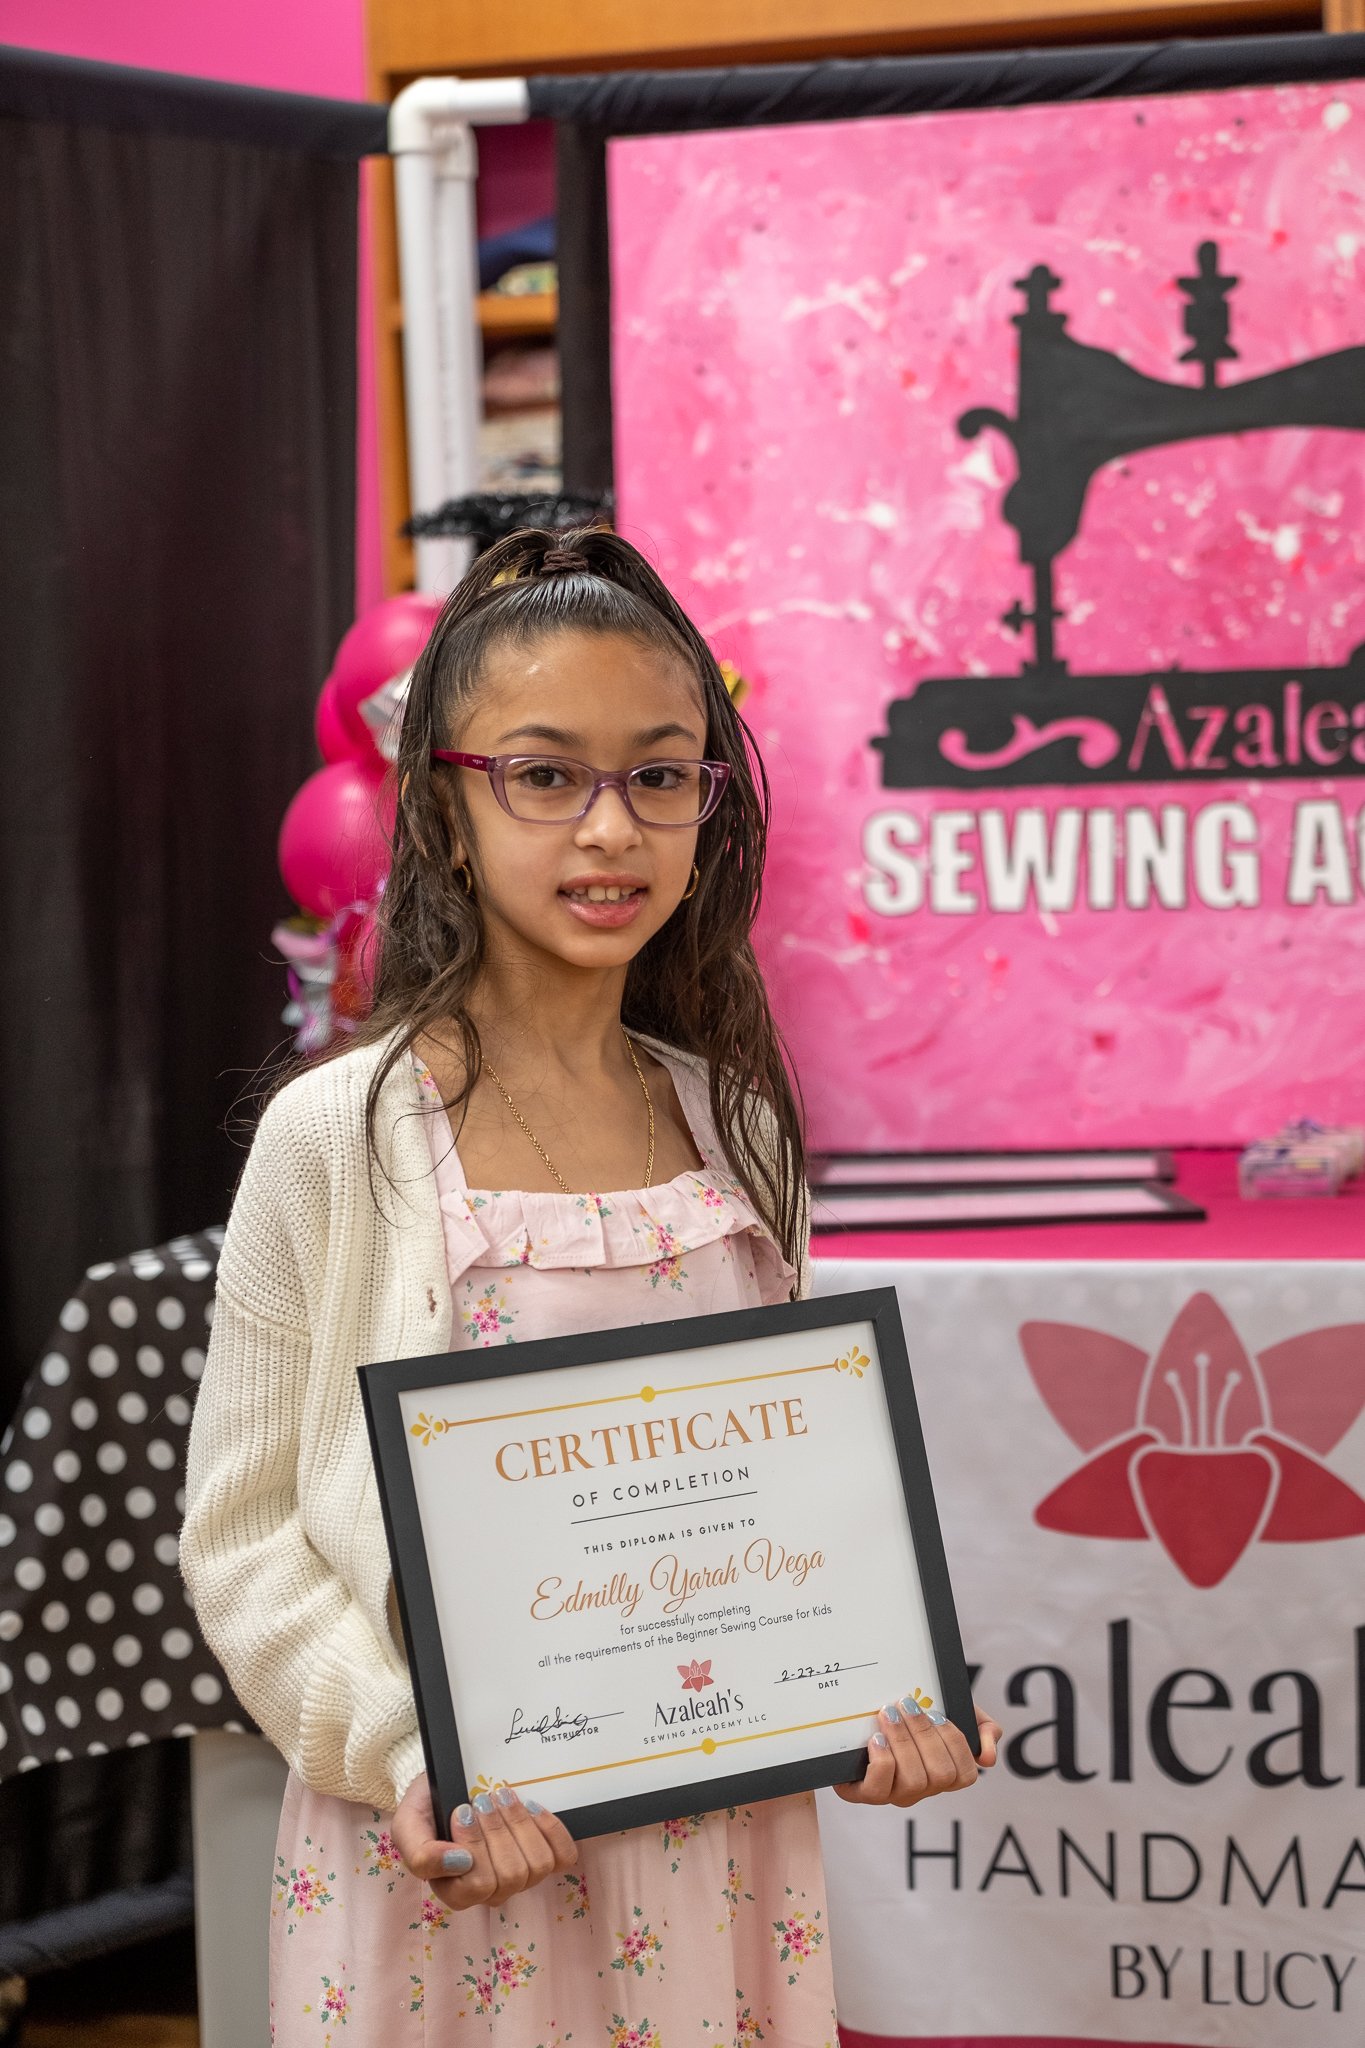 Azaleah's Sewing Academy LLC